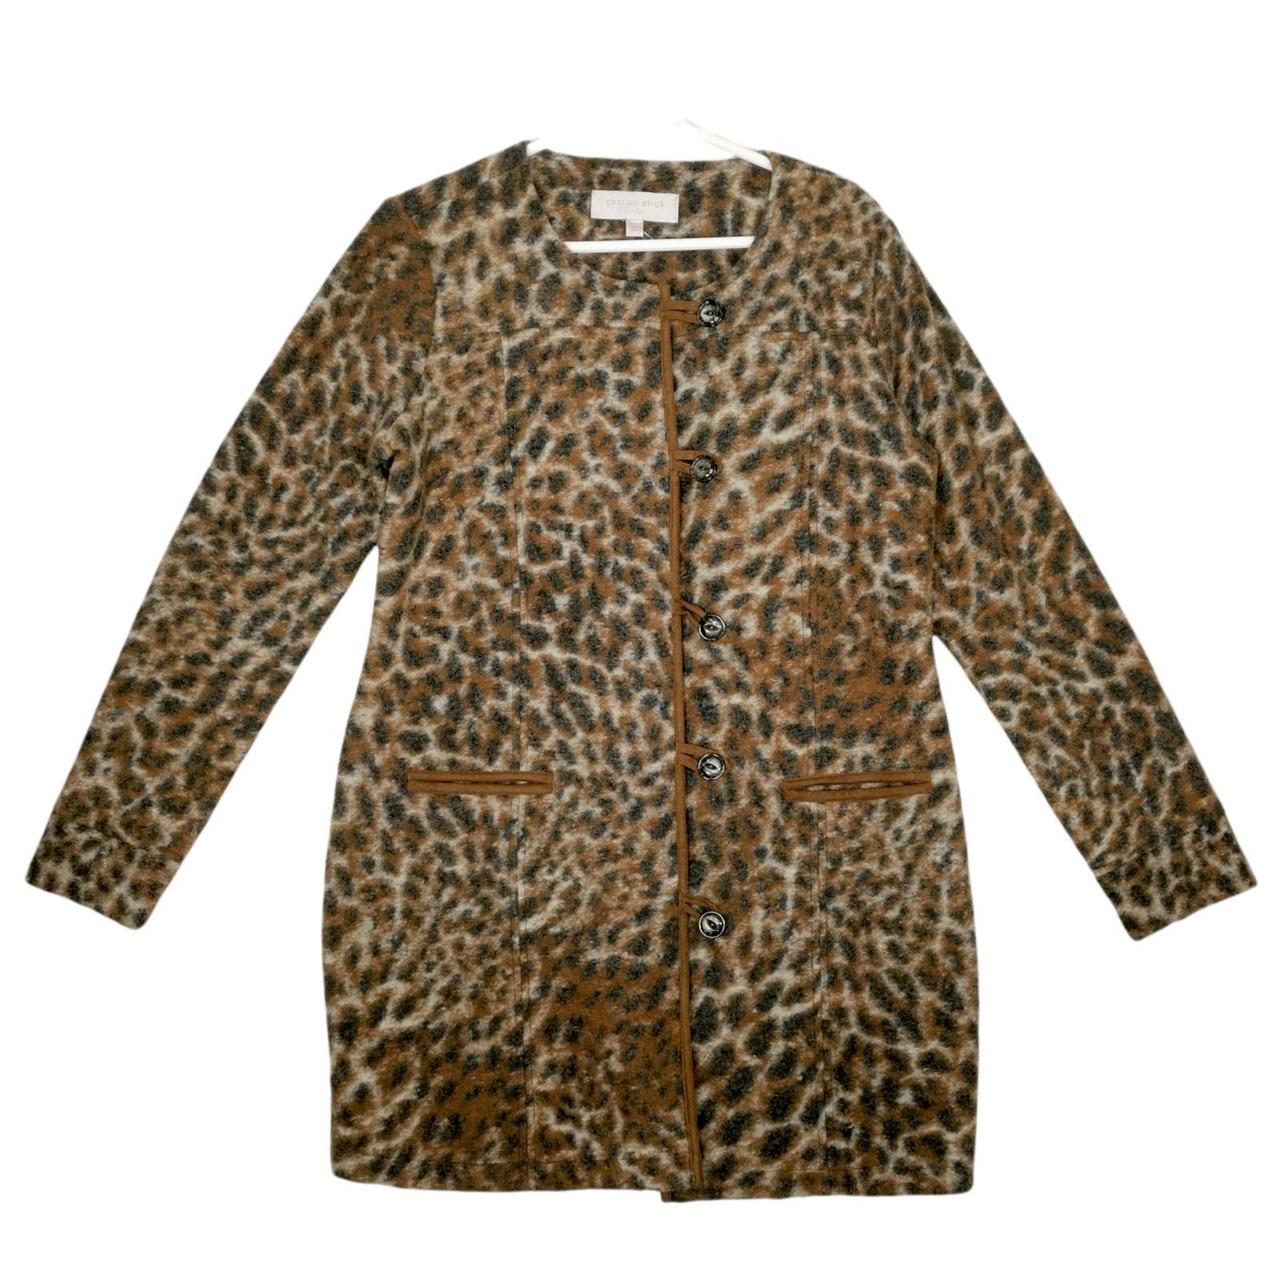 Groovygaluk Leopard Print Fur Jacket